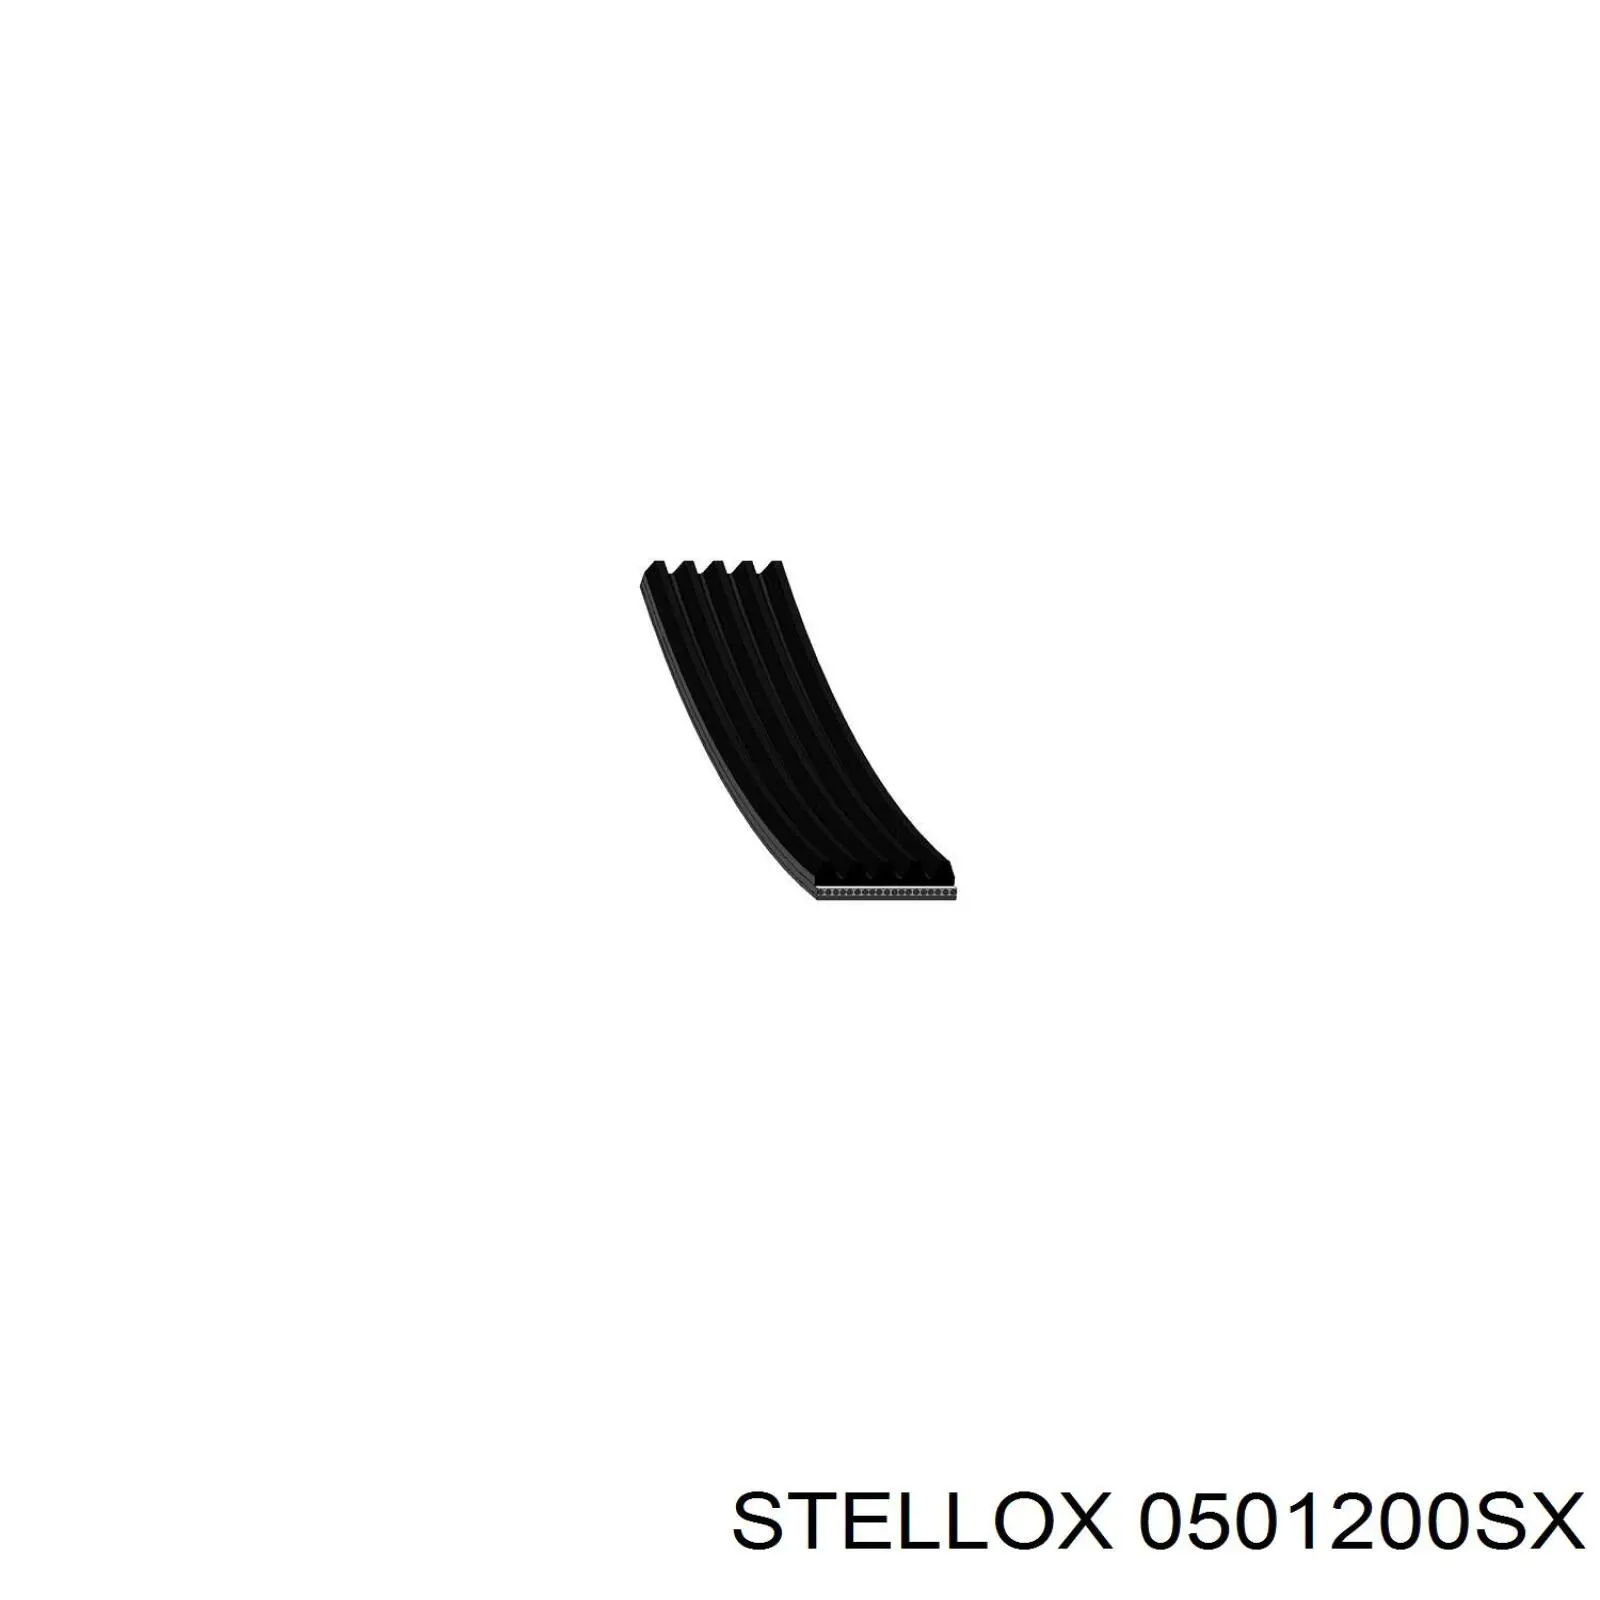 05-01200-SX Stellox correa trapezoidal